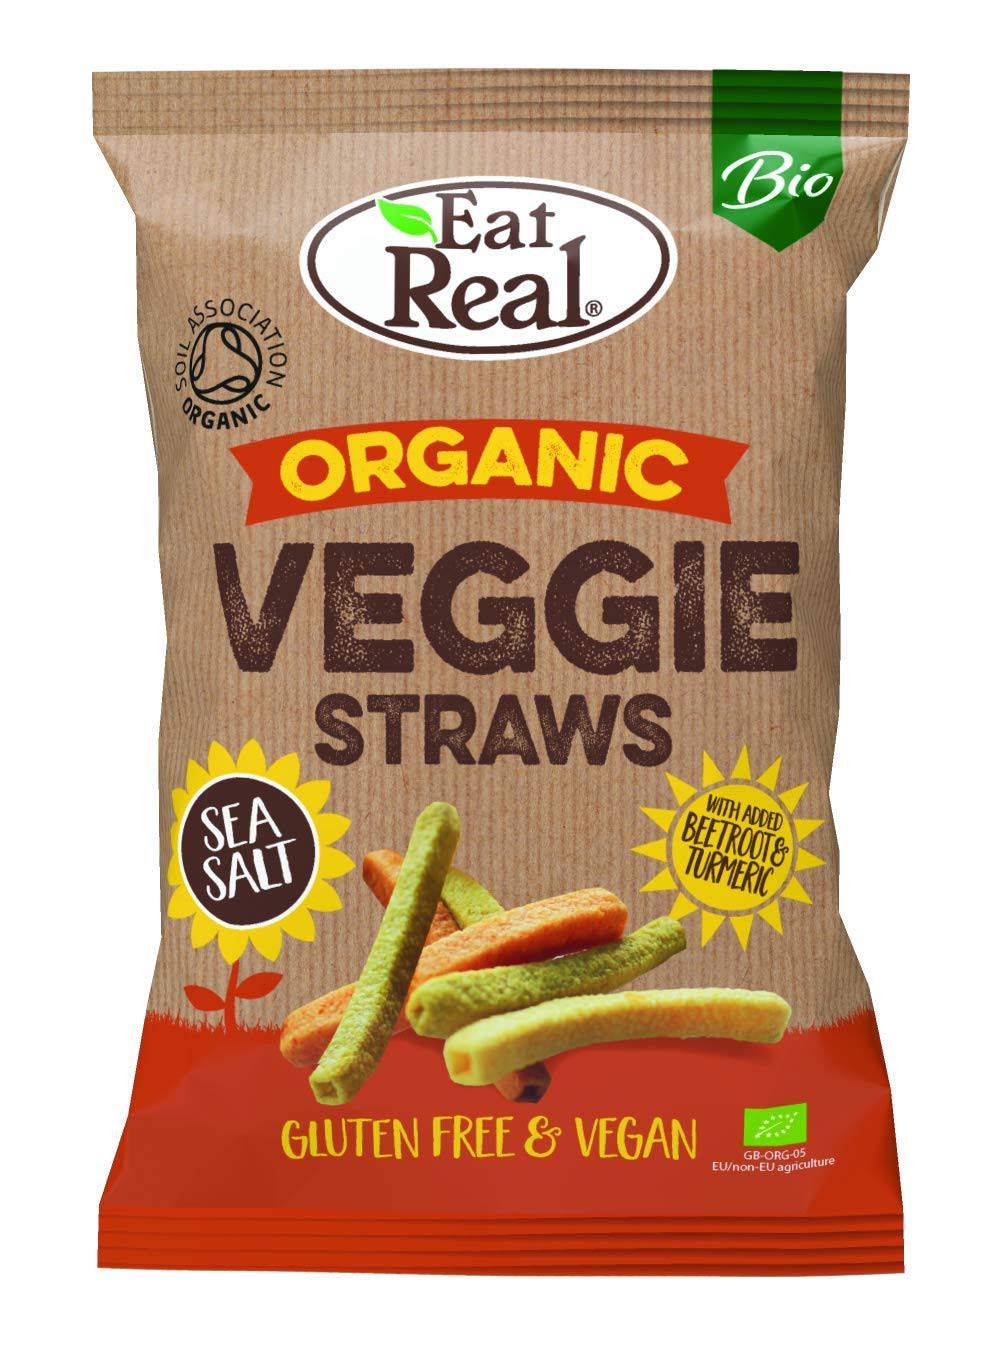 Eat Real Organic Veggie Straws Chips - Sea Salt, 100g